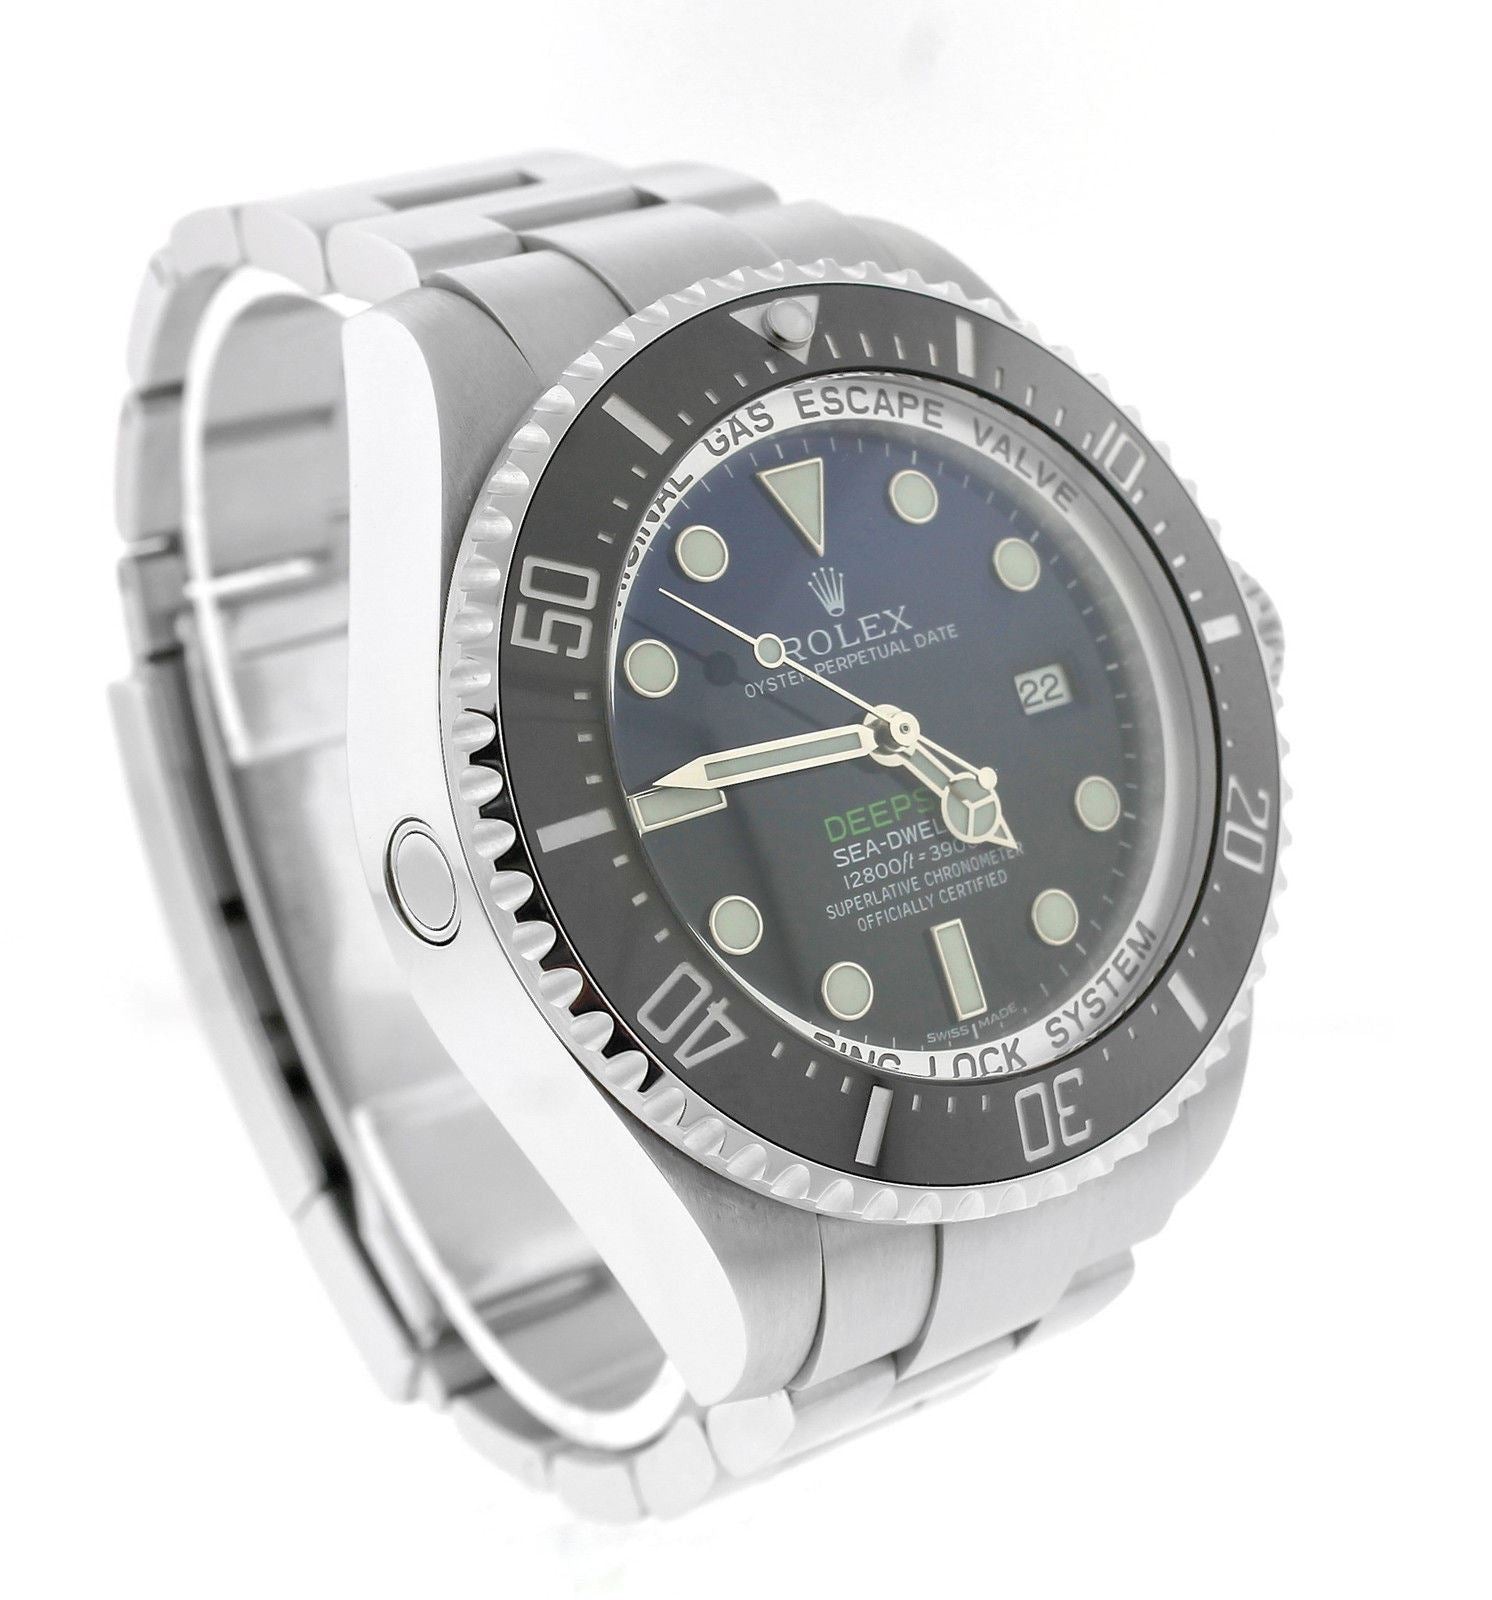 2017 Rolex Sea-Dweller Deepsea 'James Cameron' Blue Black 116660 44mm Dive Watch